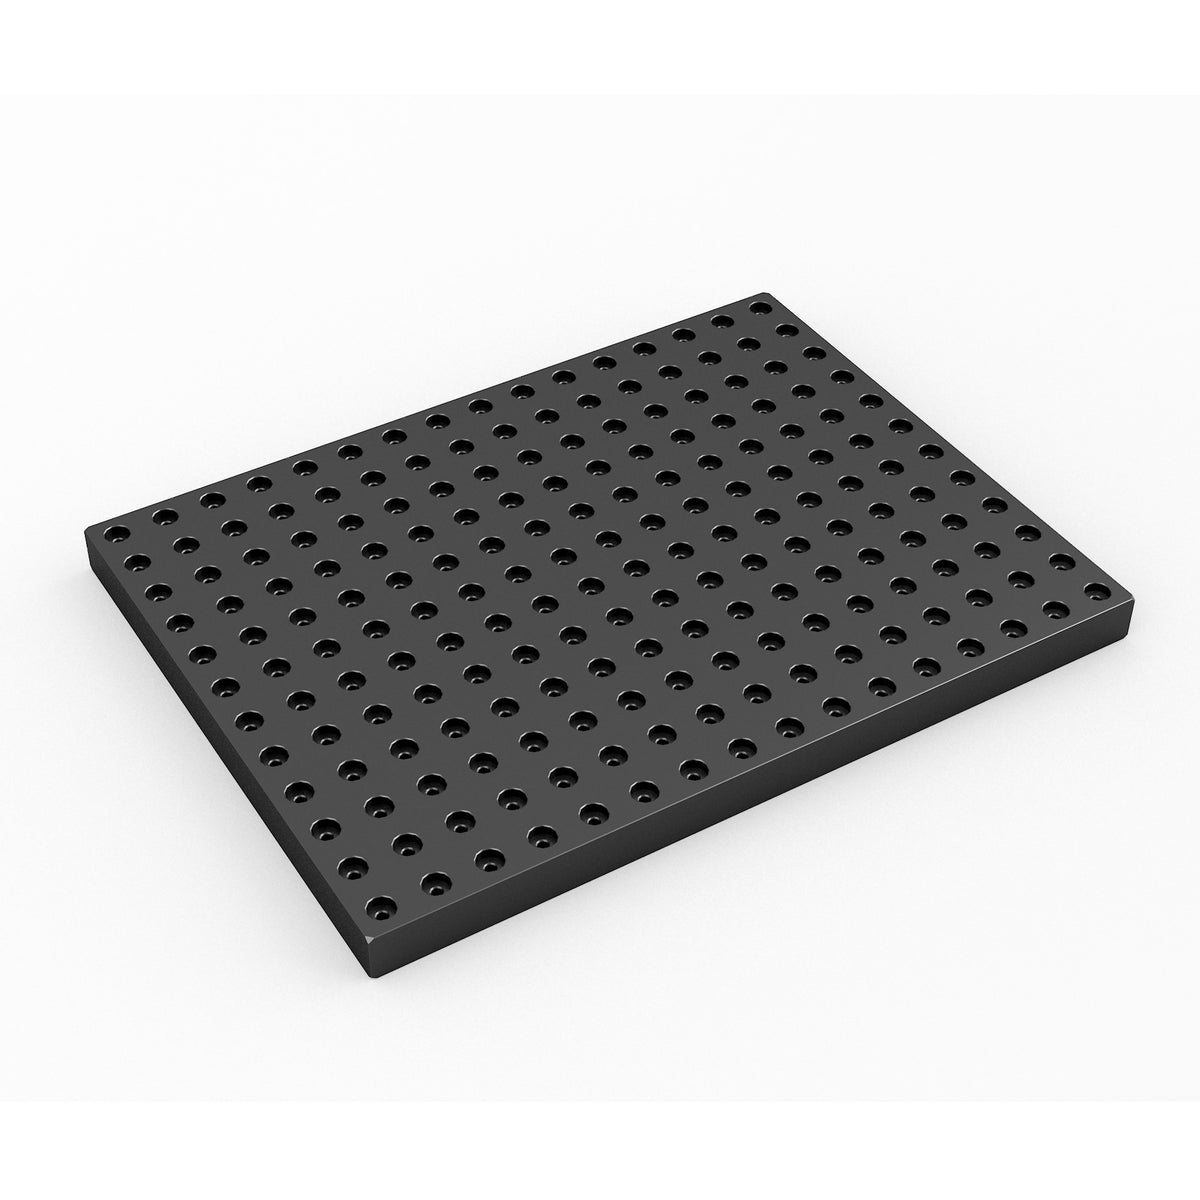 CMM Fixture Grid base plate 20x400x600mm